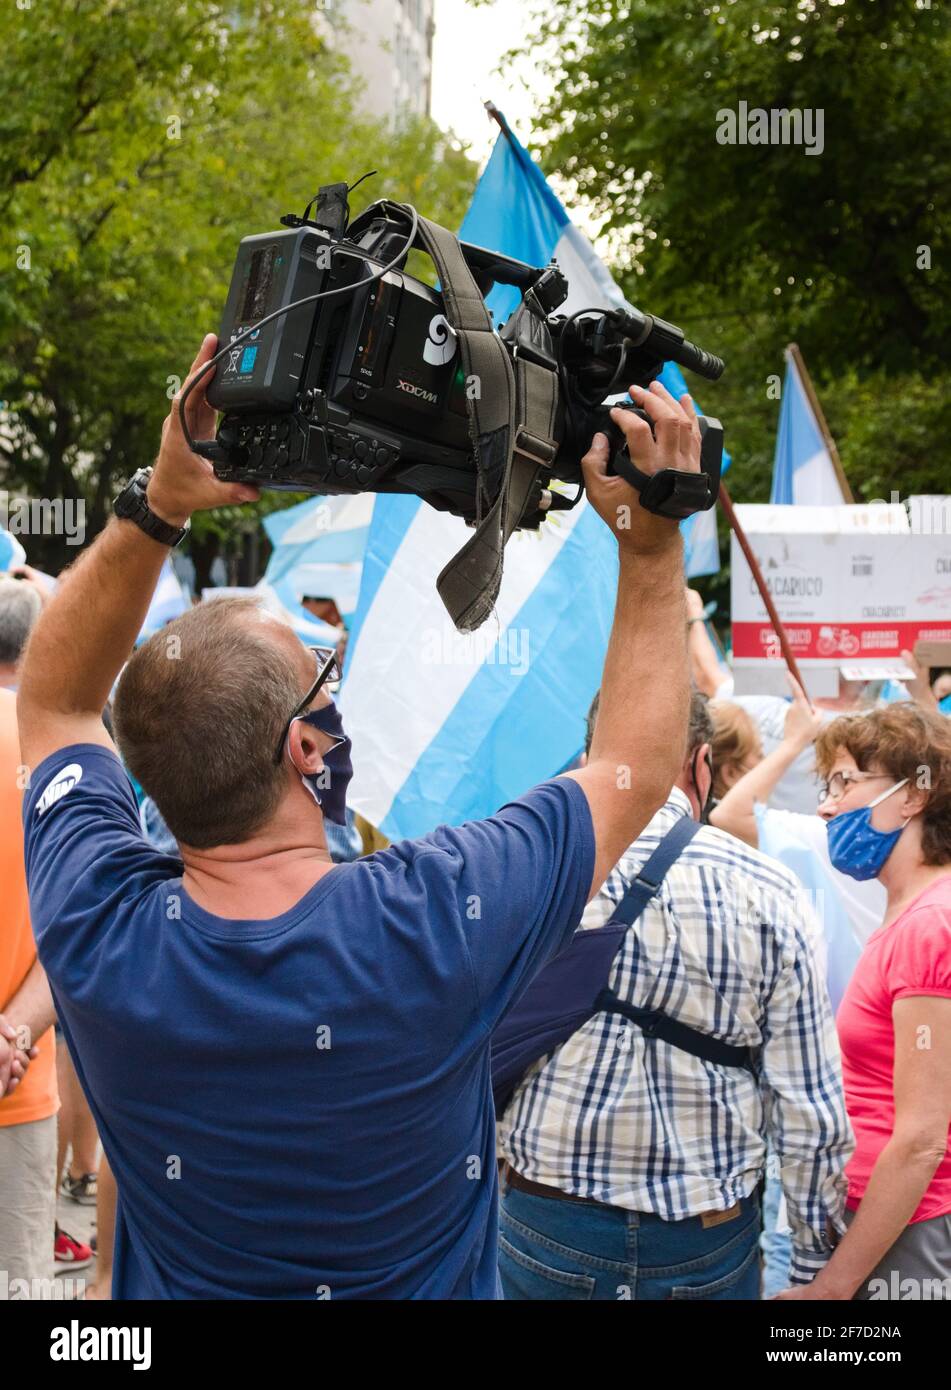 2021-02-27, Mendoza, Argentina - Cameraman holding a professional TV camera during a protest. Stock Photo